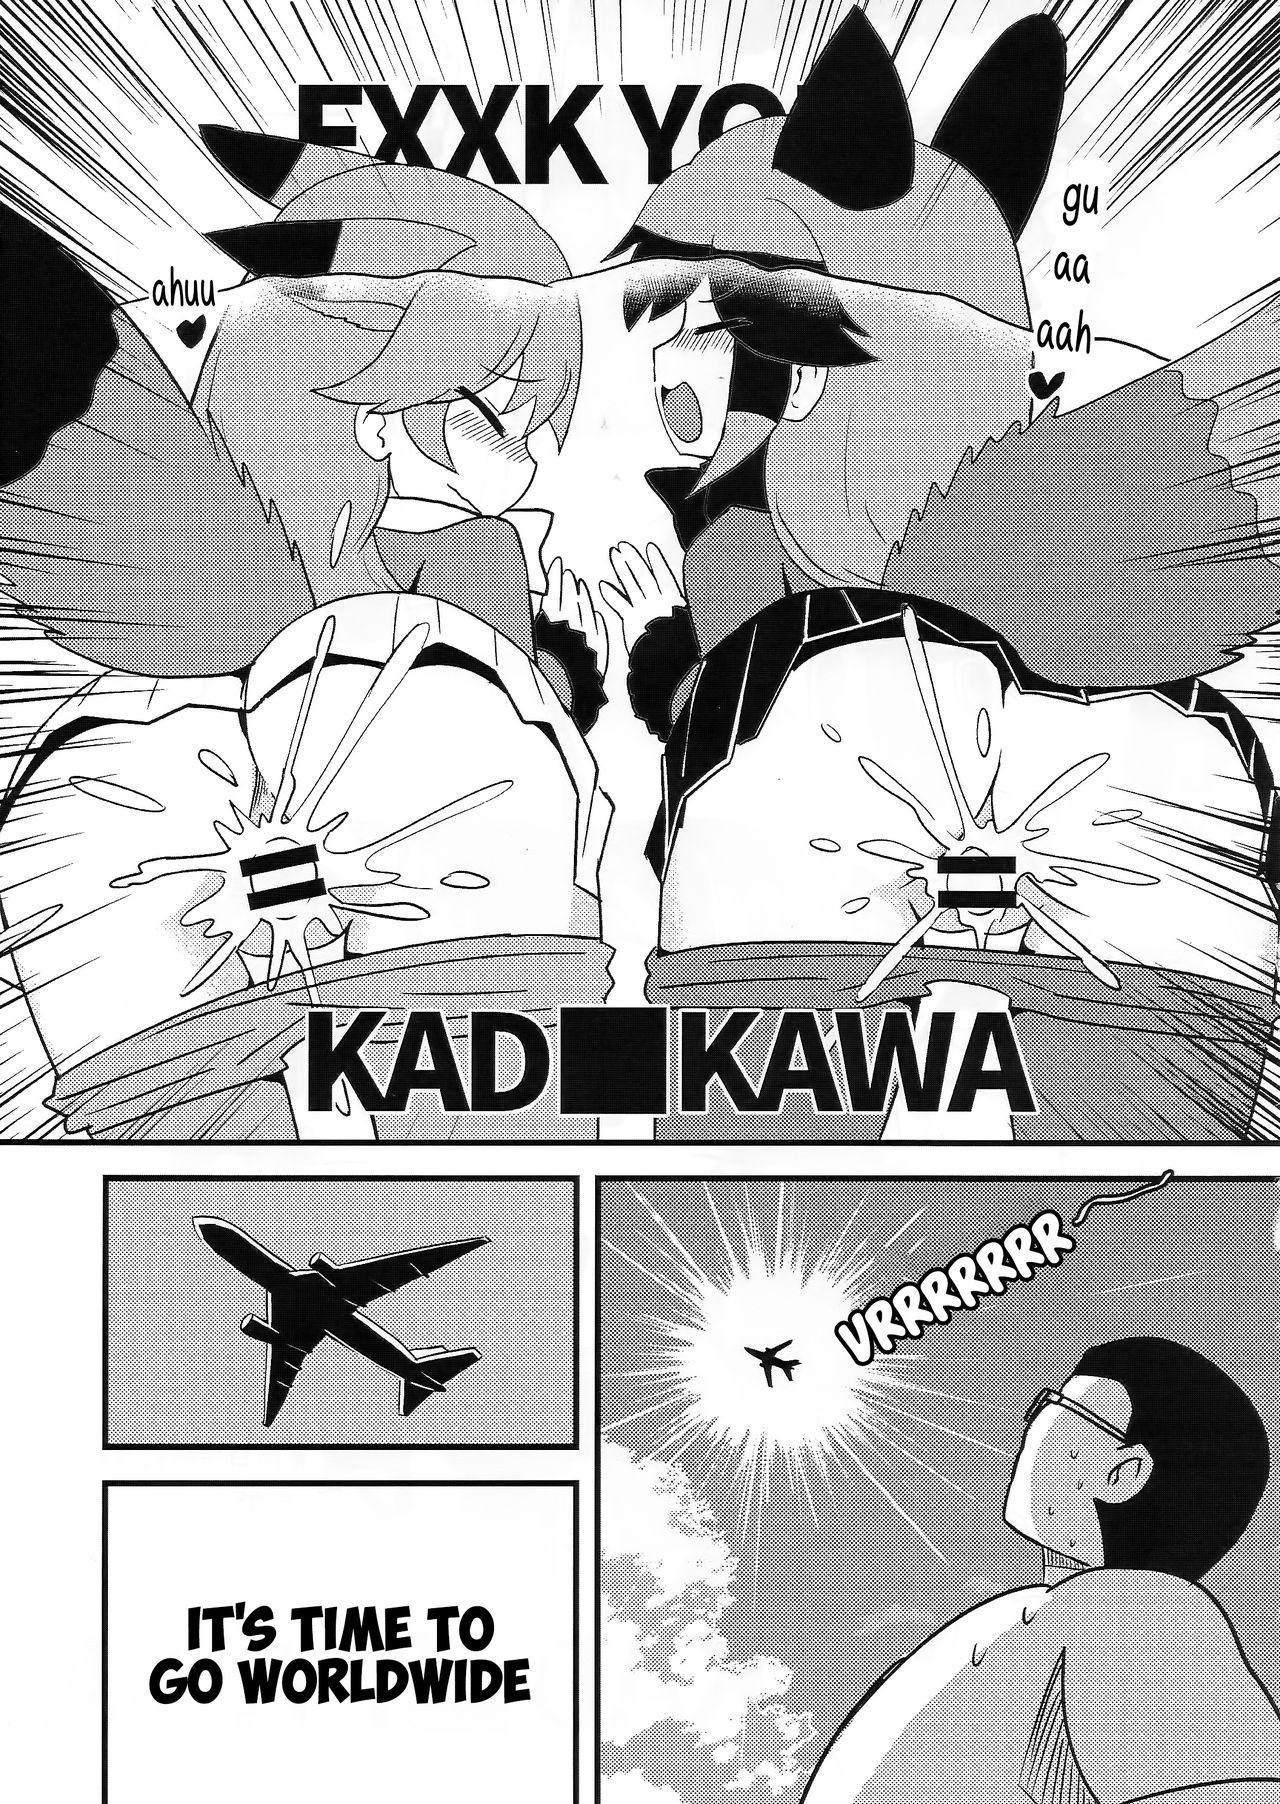 FXXK YOU KADOKAWA 10